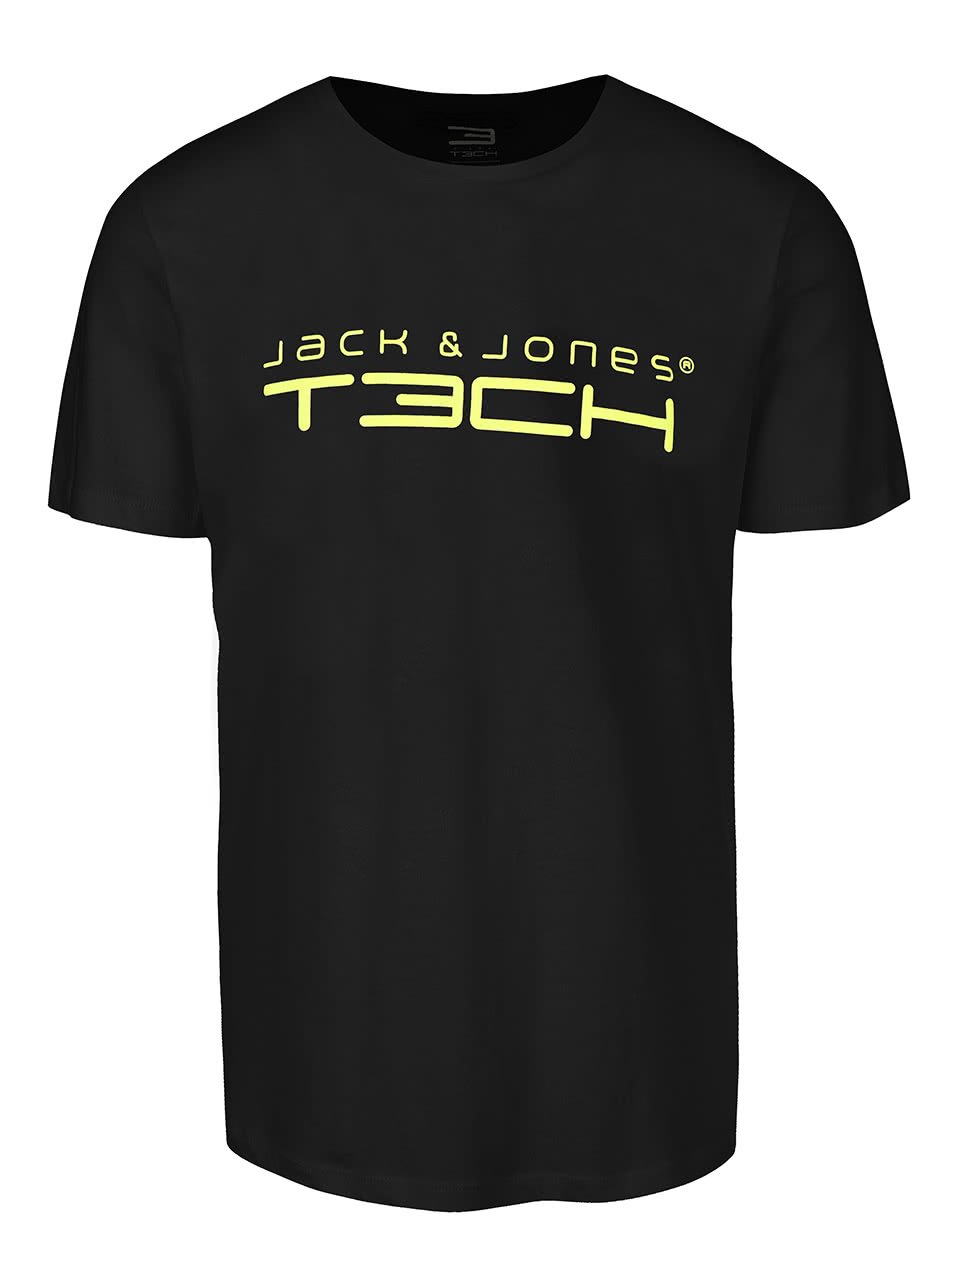 Černé triko s nápisem Jack & Jones Foam